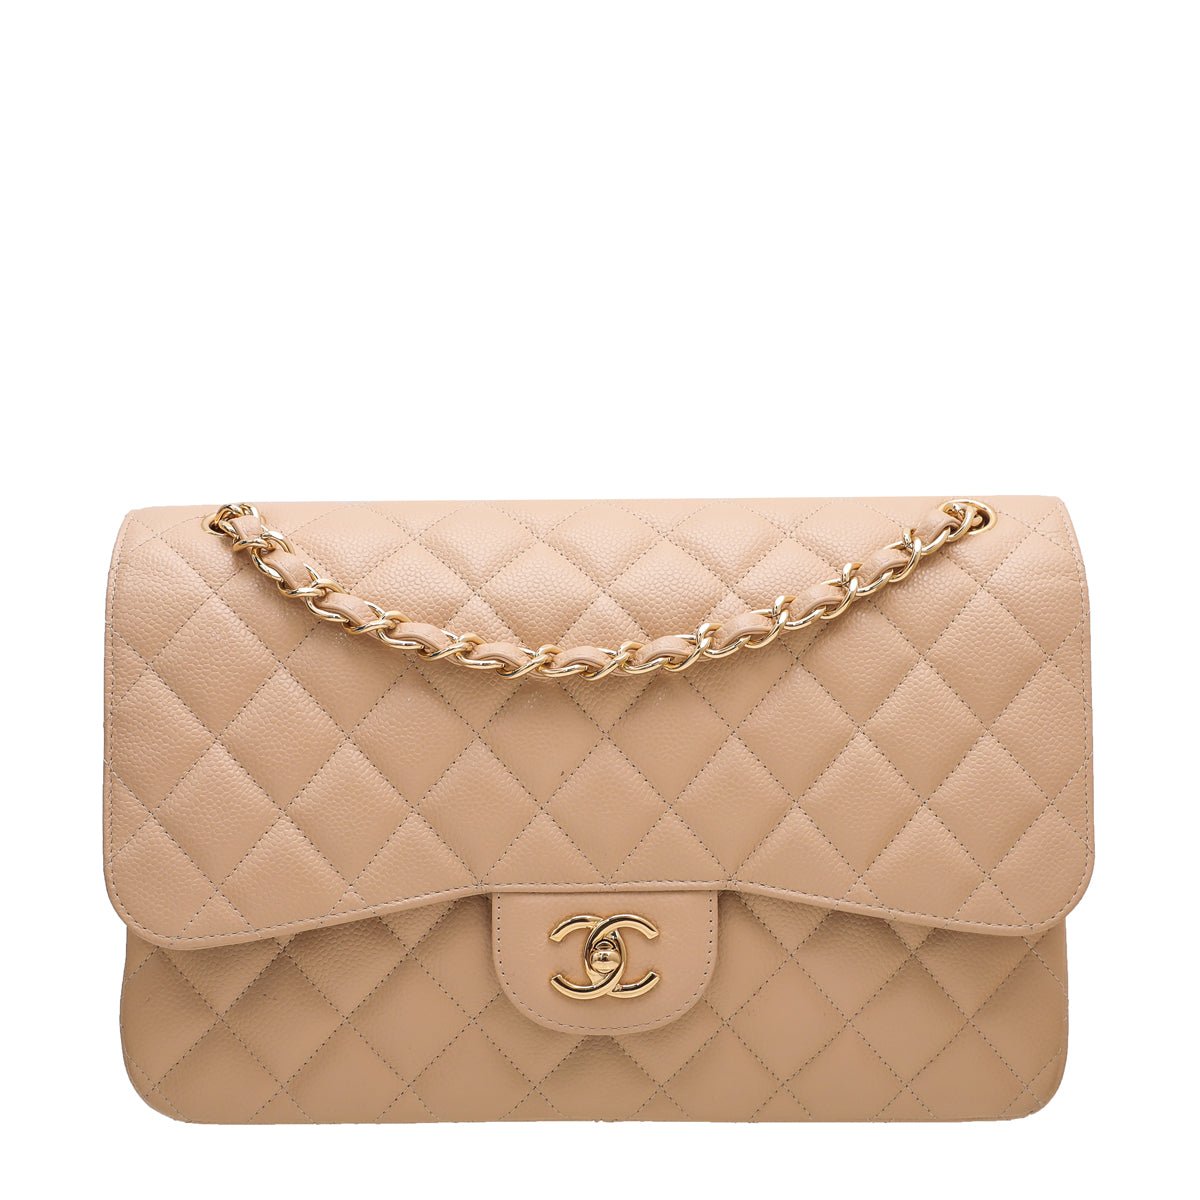 The Closet - Chanel Beige Classic Double Flap Bag | The Closet